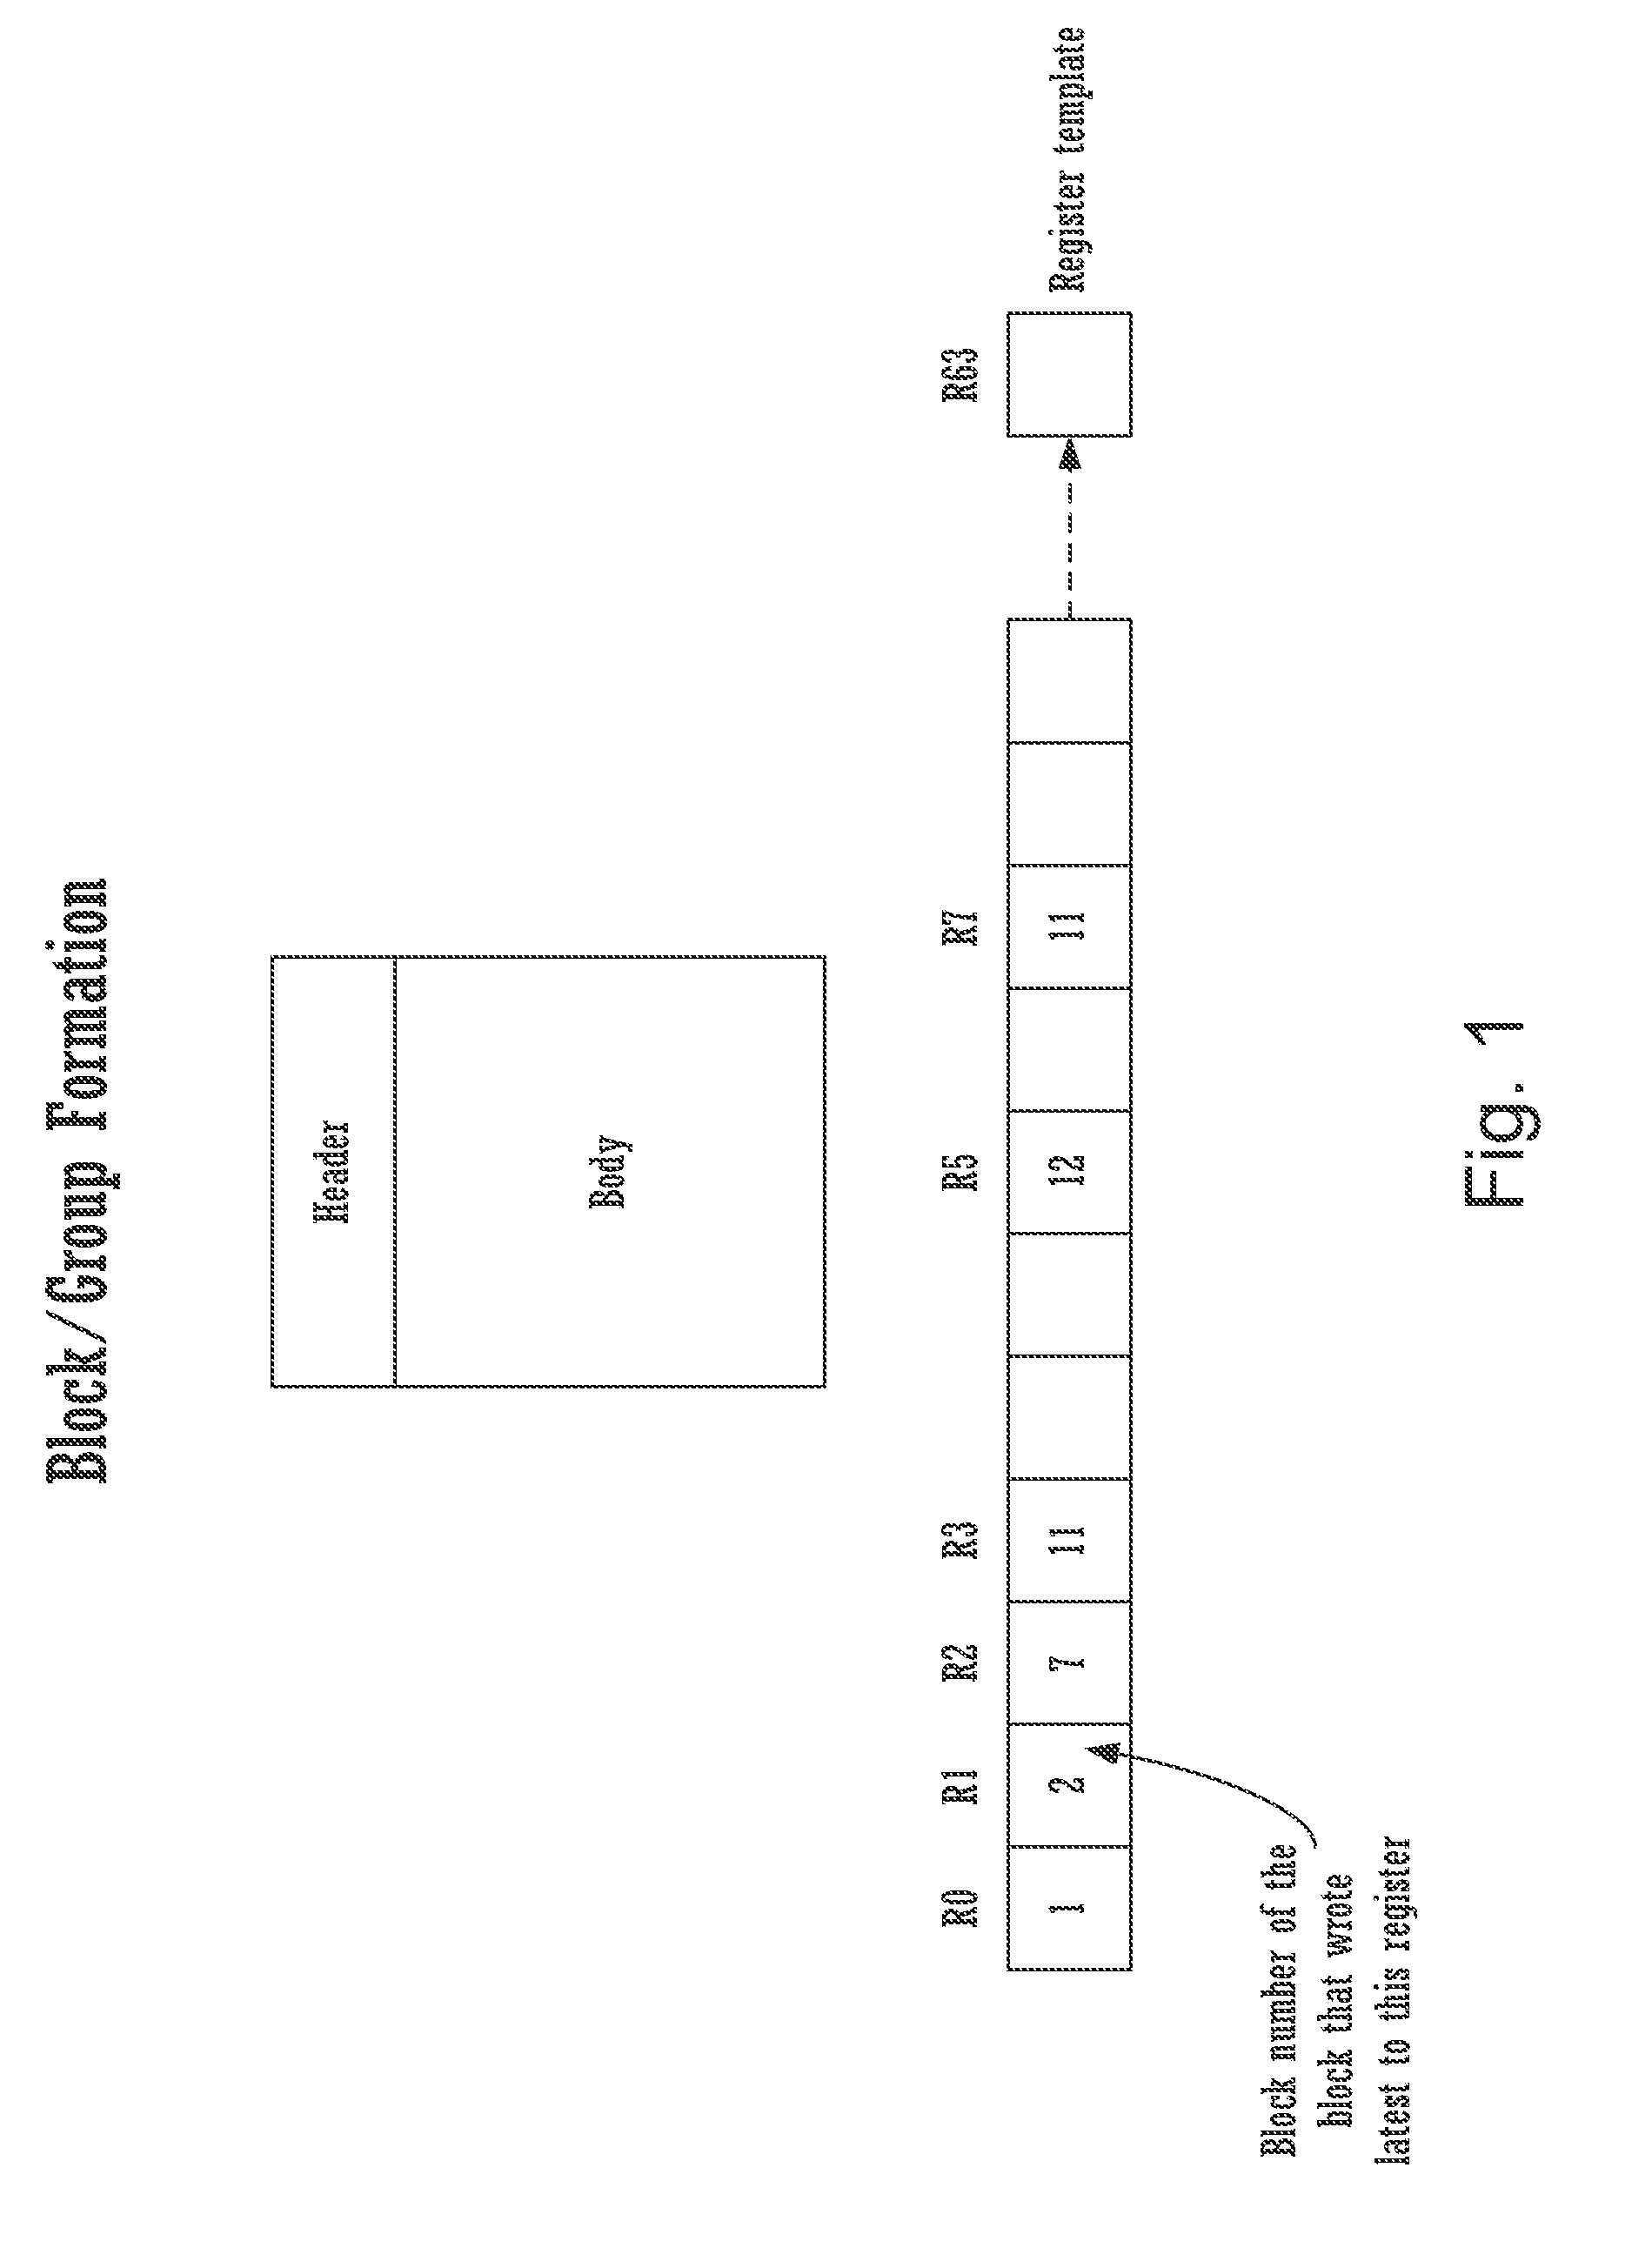 Method for performing dual dispatch of blocks and half blocks